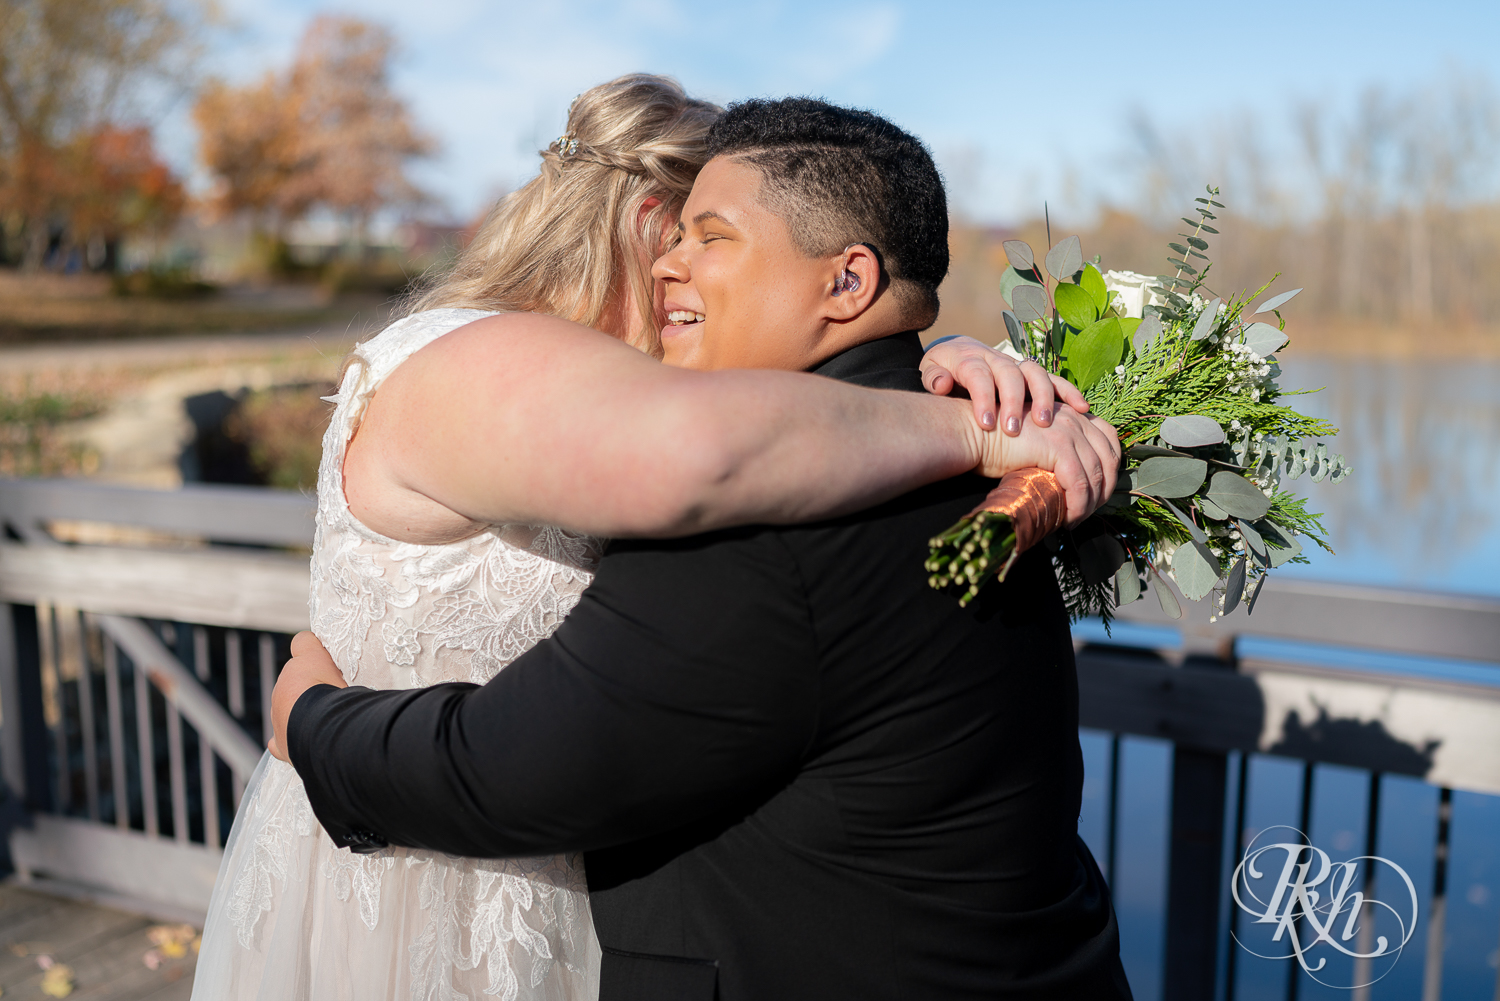 First look between lesbian brides at the Eagan Community Center in Eagan, Minnesota.